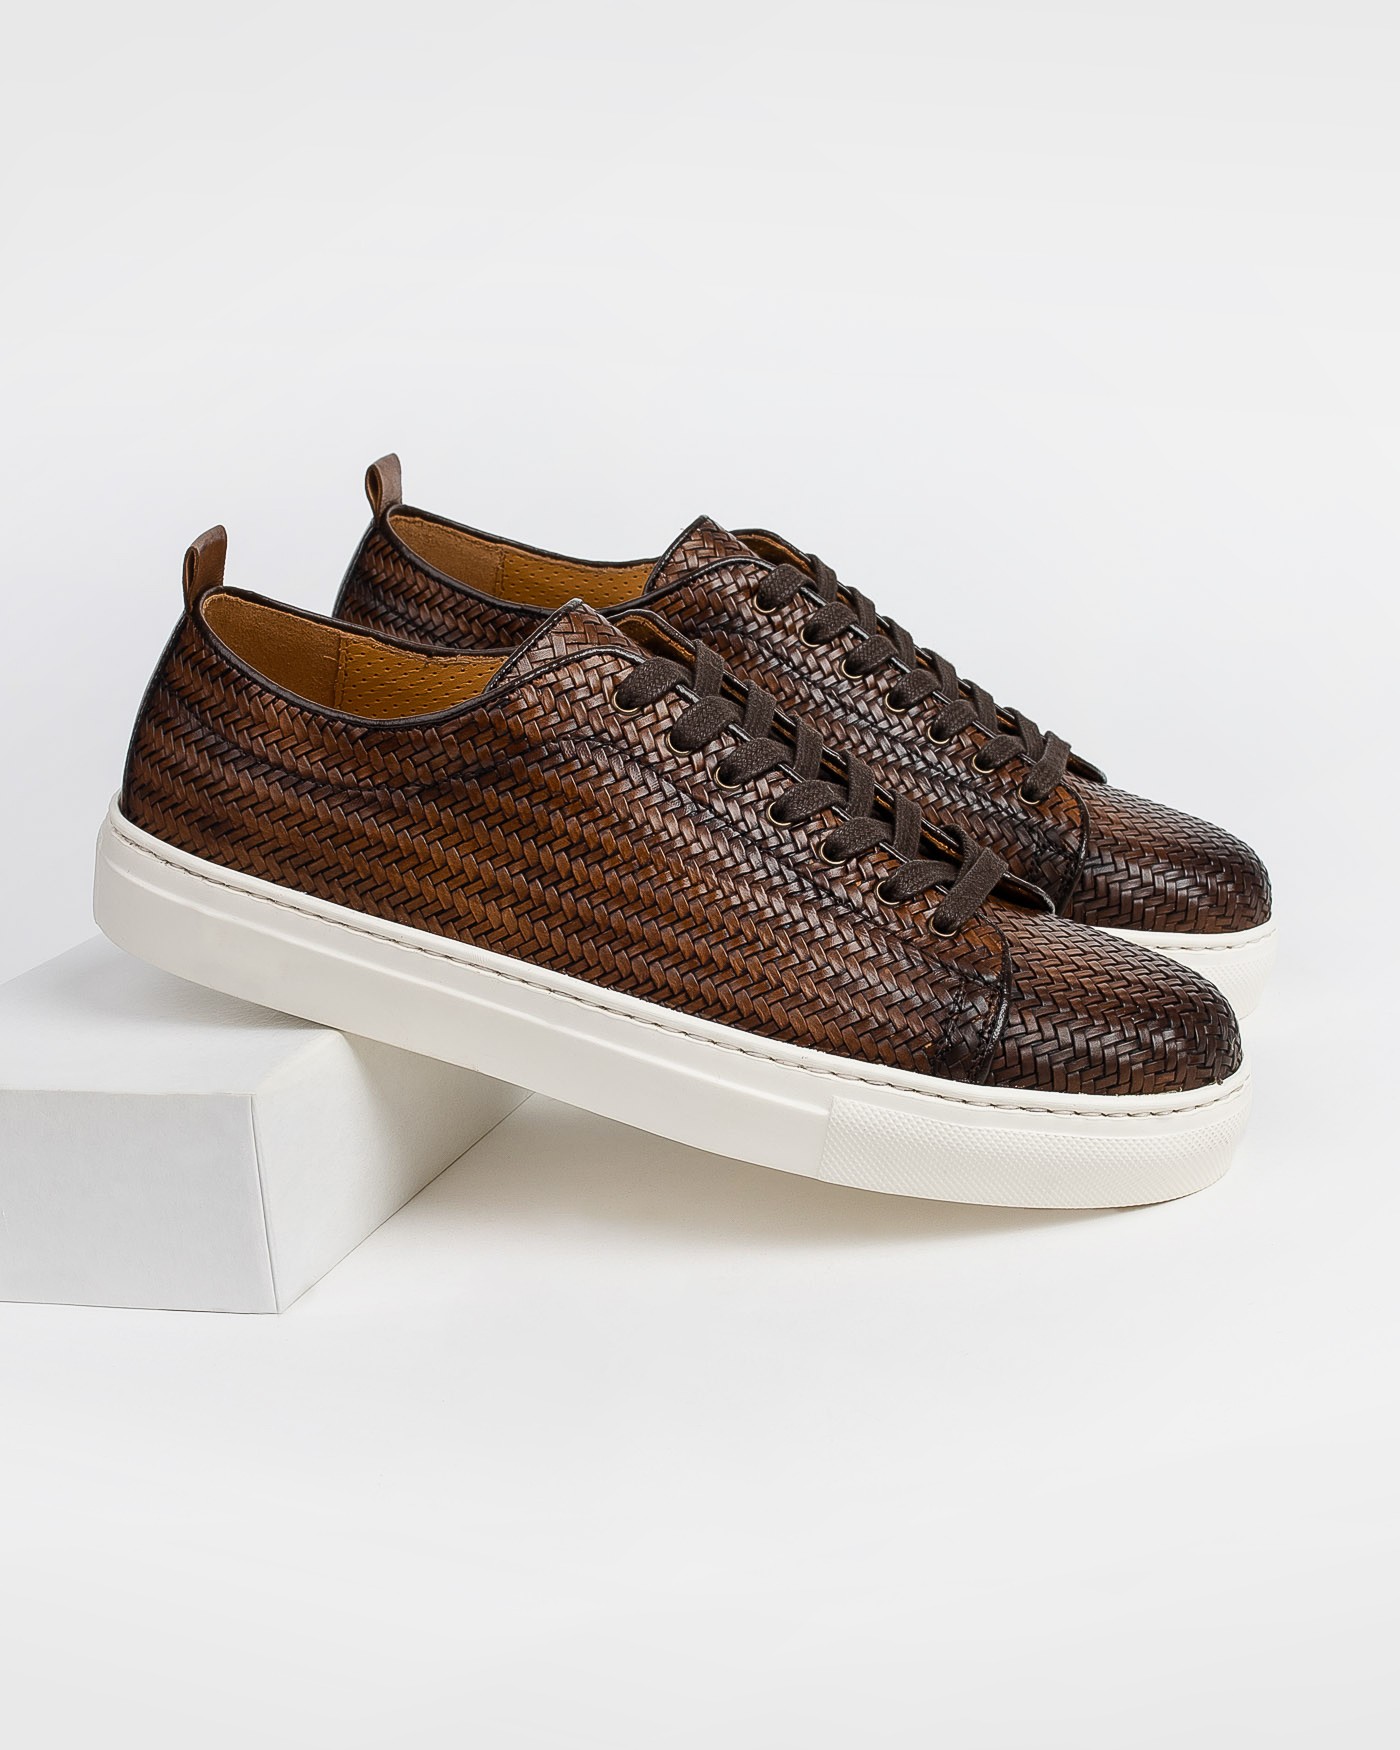 calce-zapatillas-magnum-gold-sneakers-brown-marron (4)